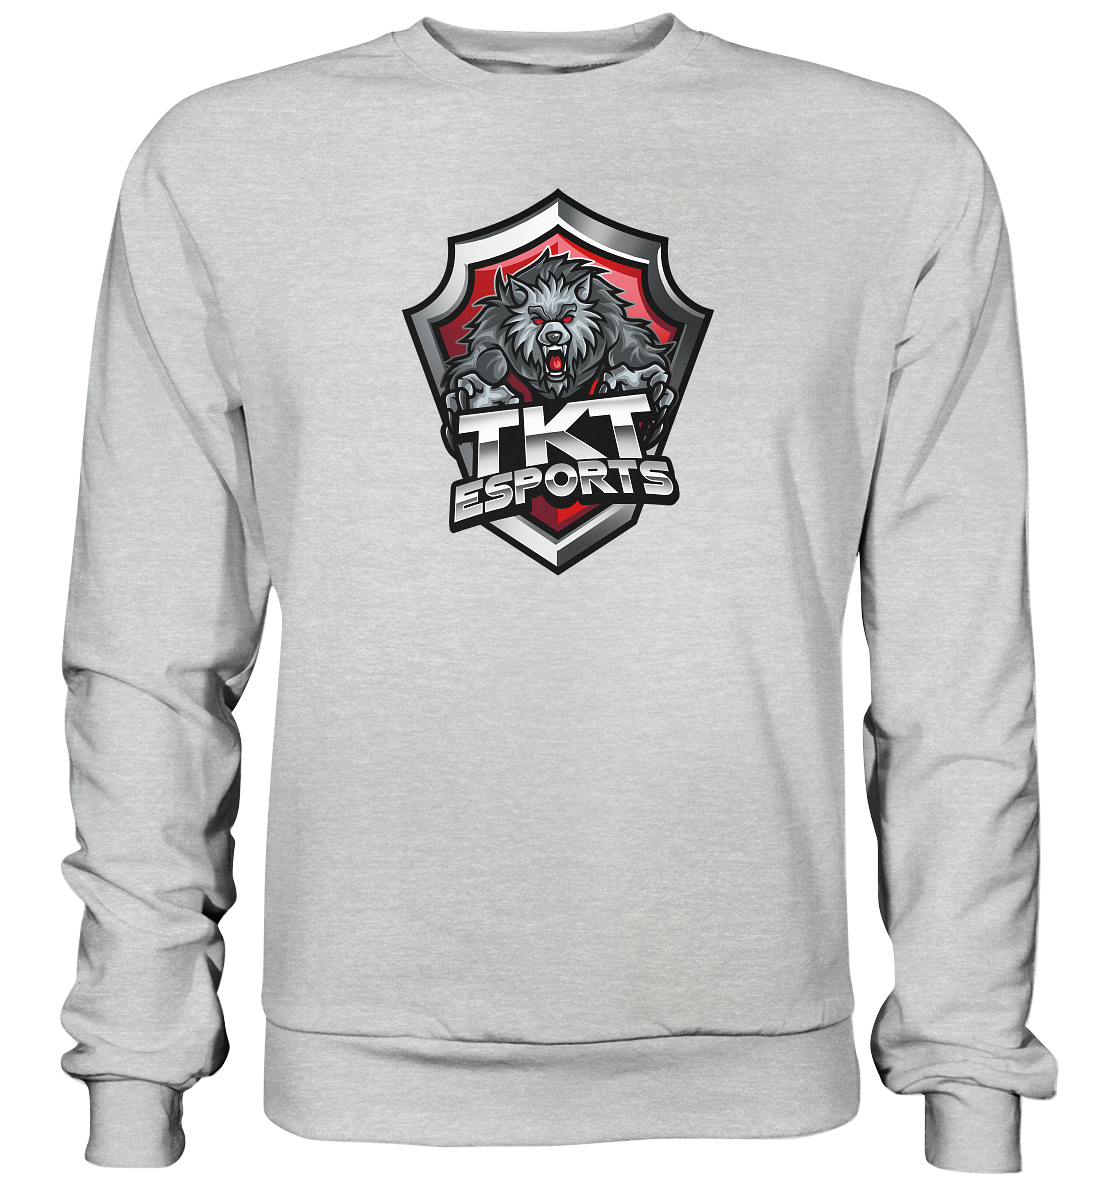 TKT ESPORTS - Basic Sweatshirt